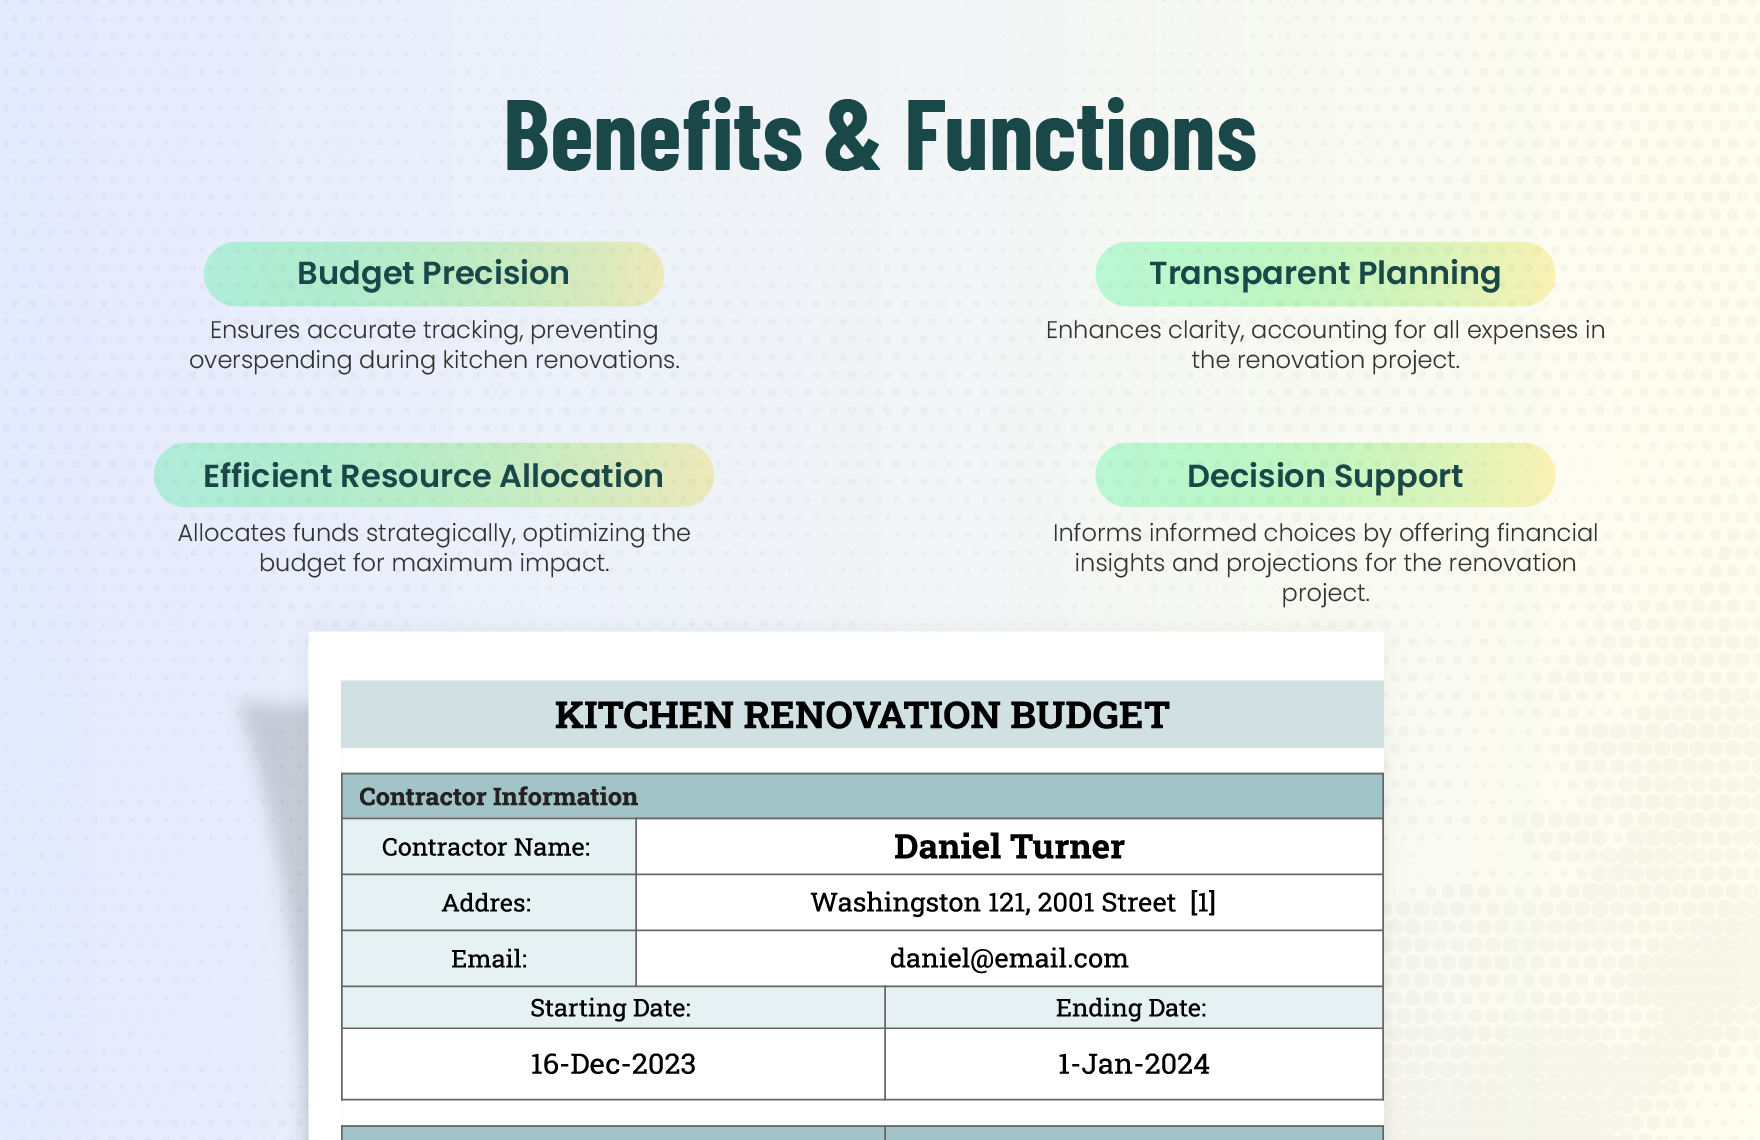 Sample Kitchen Renovation Budget Template